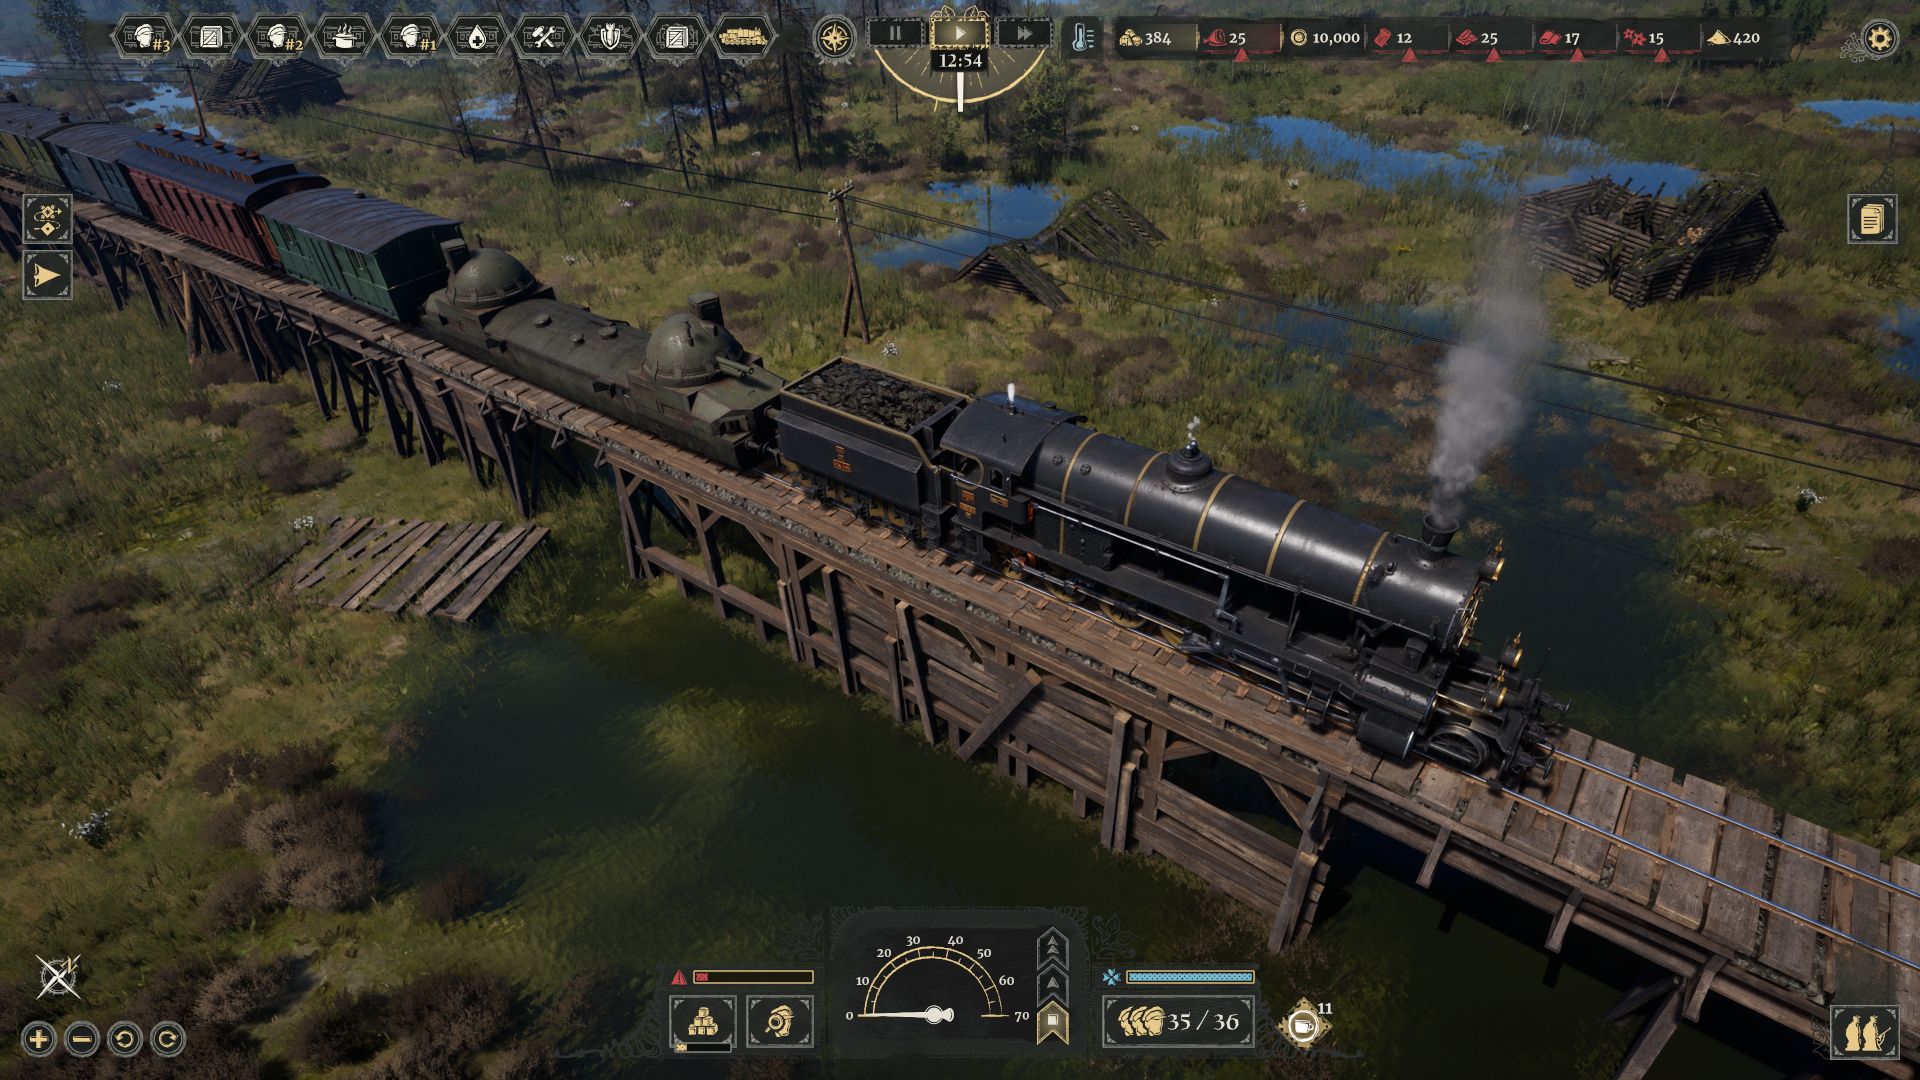 Tangkapan layar gameplay dari Last Train Home menunjukkan kereta lapis baja besar bergerak melintasi jembatan kayu.